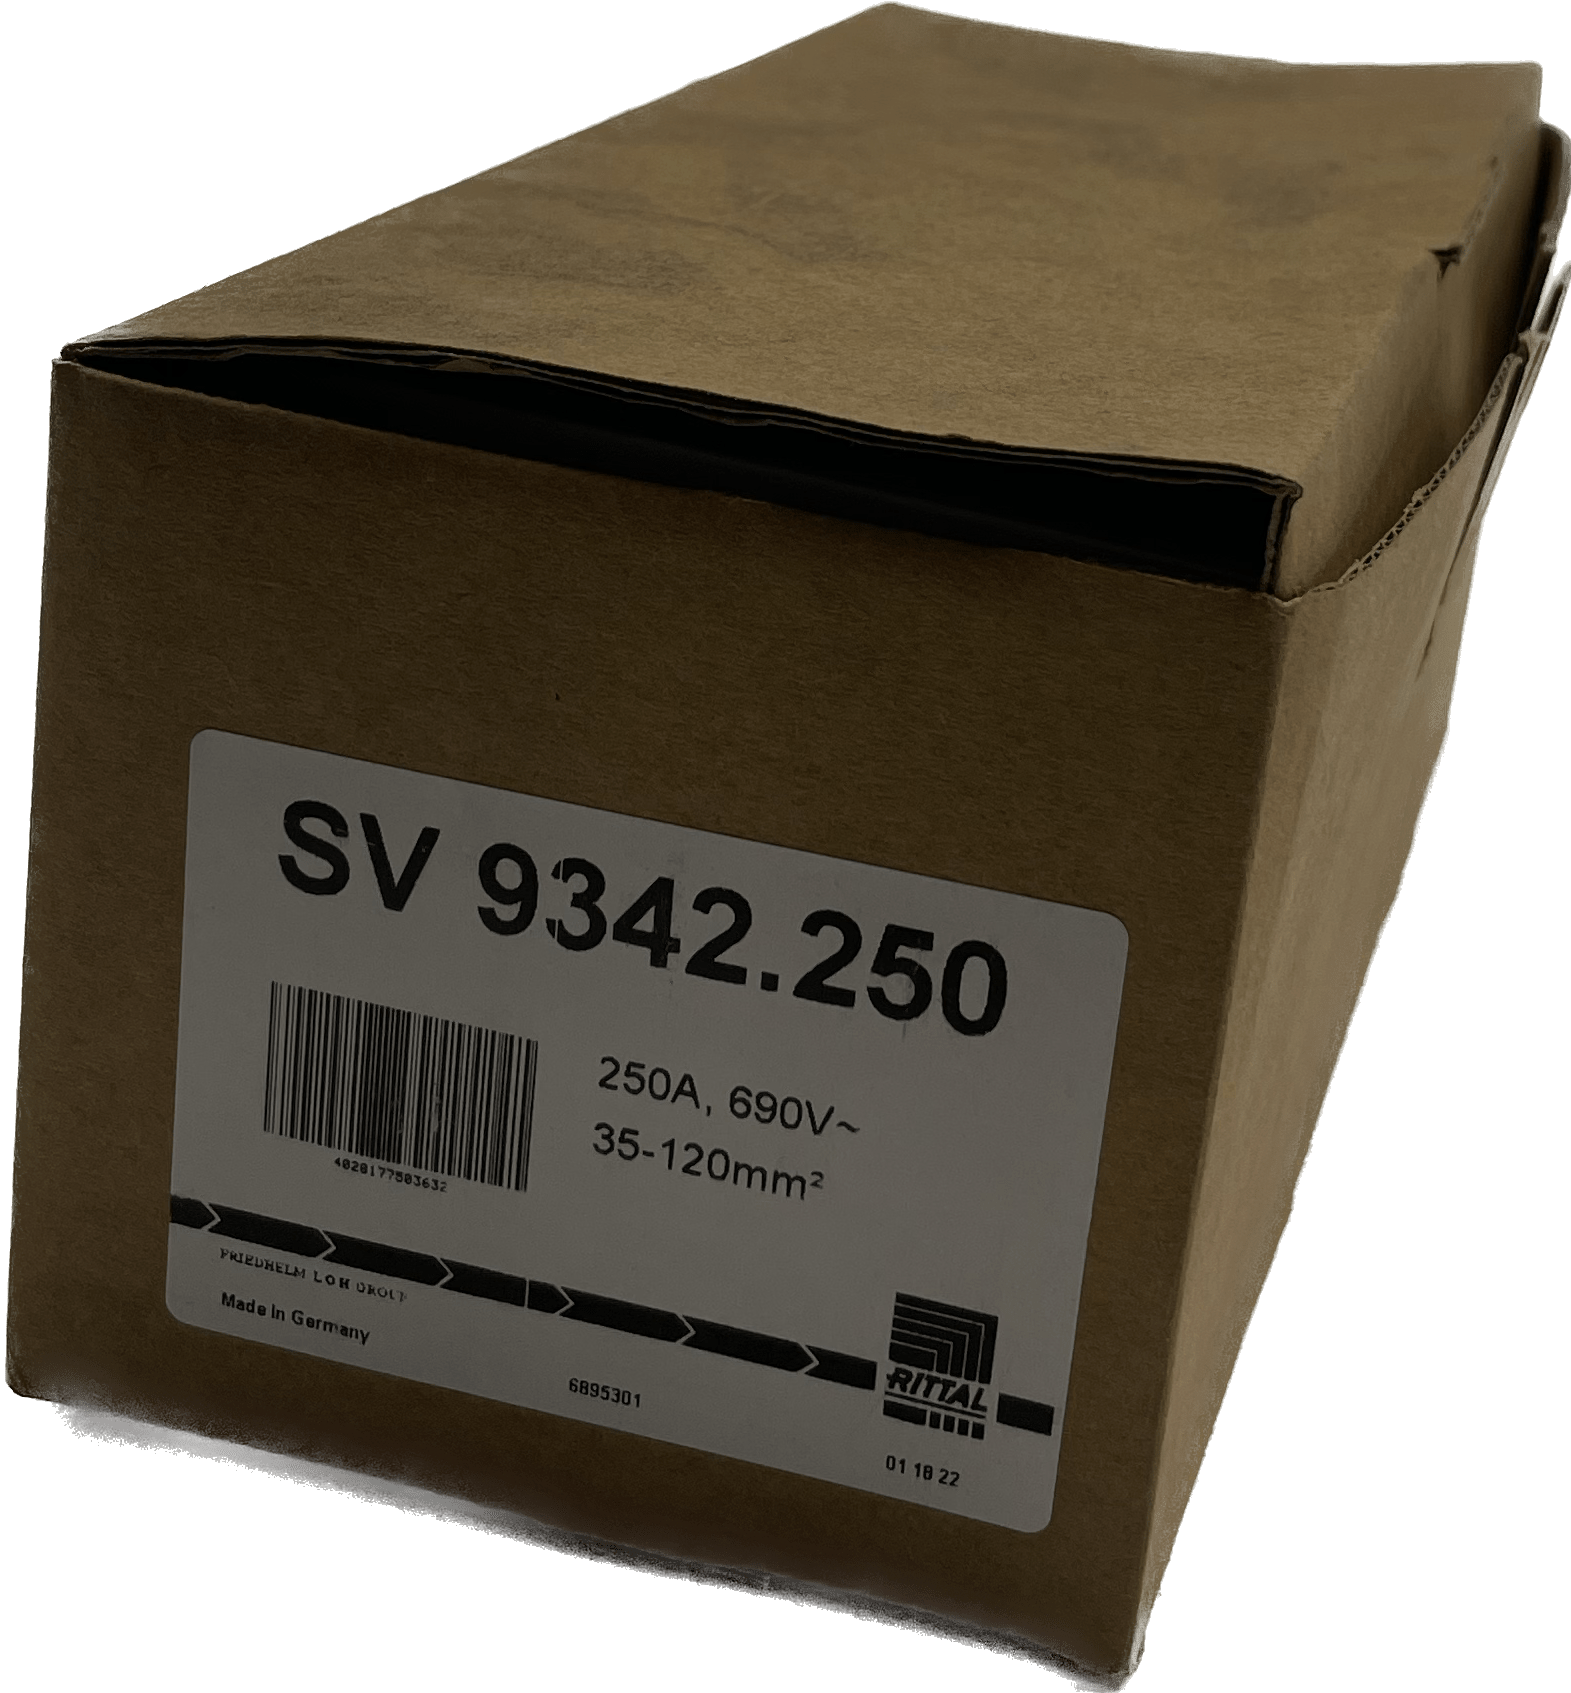 Rittal SV9342.250 Anschlussadapter - #product_category# | Klenk Maschinenhandel